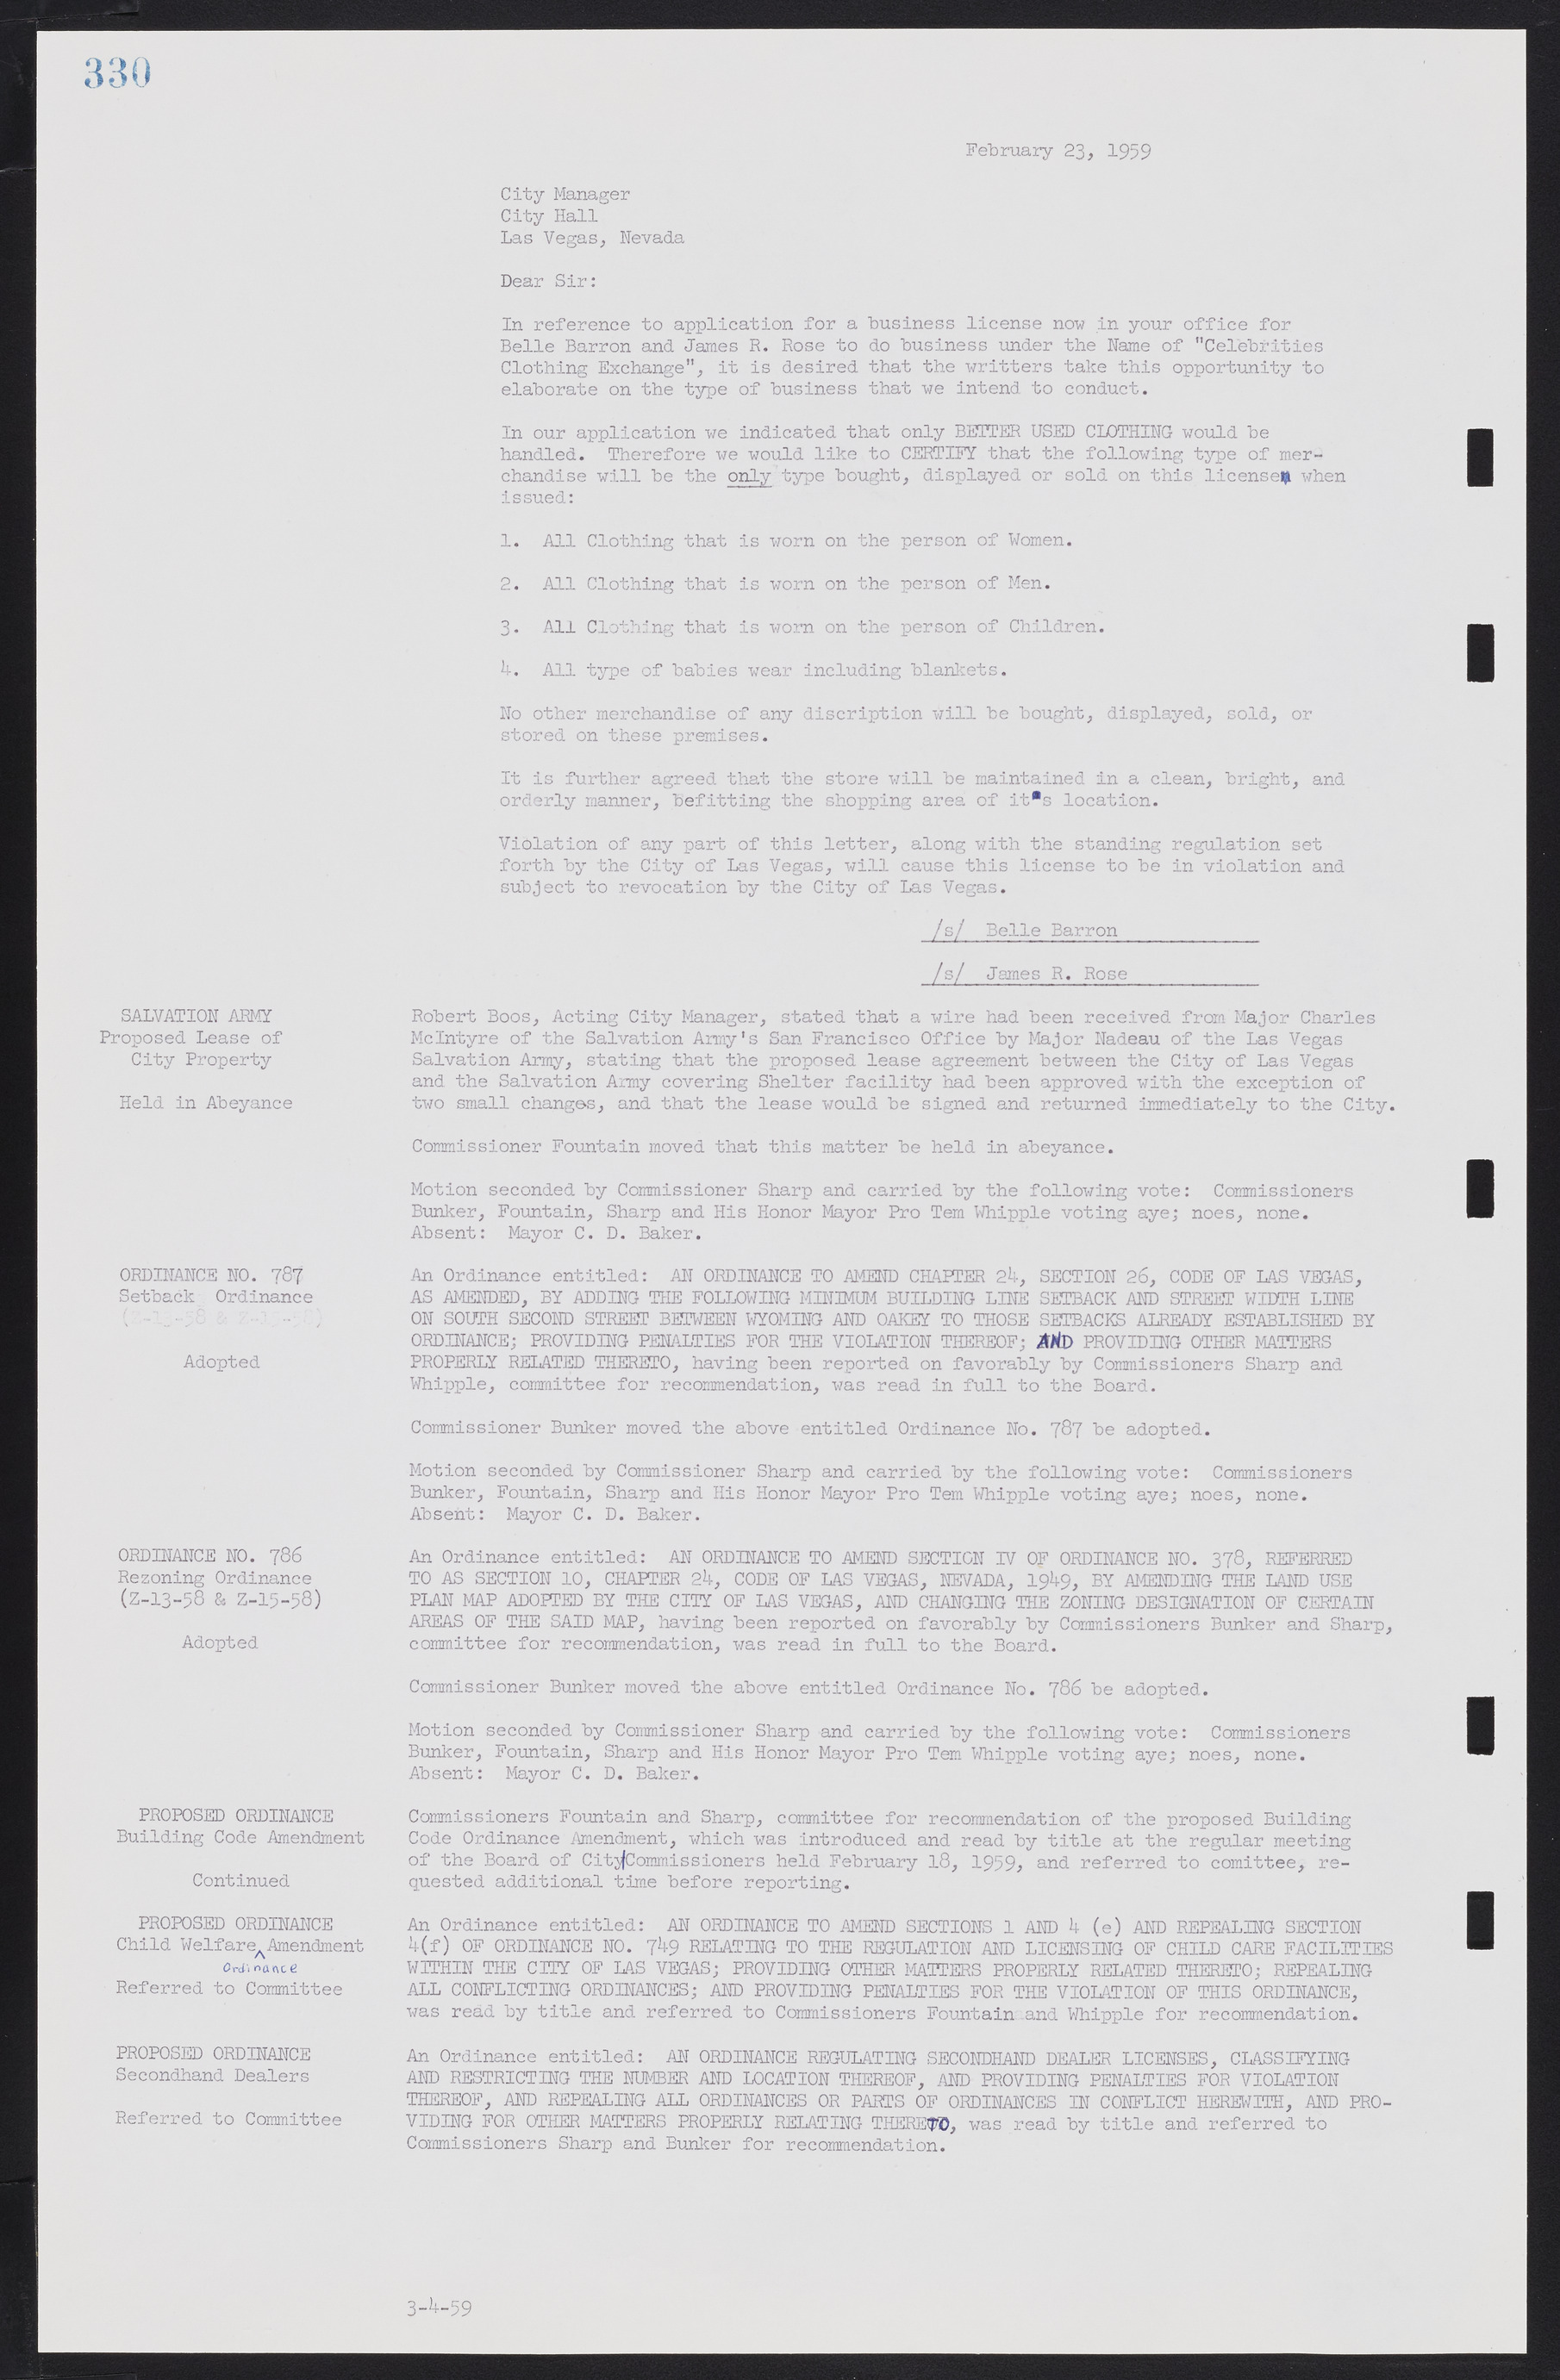 Las Vegas City Commission Minutes, November 20, 1957 to December 2, 1959, lvc000011-338